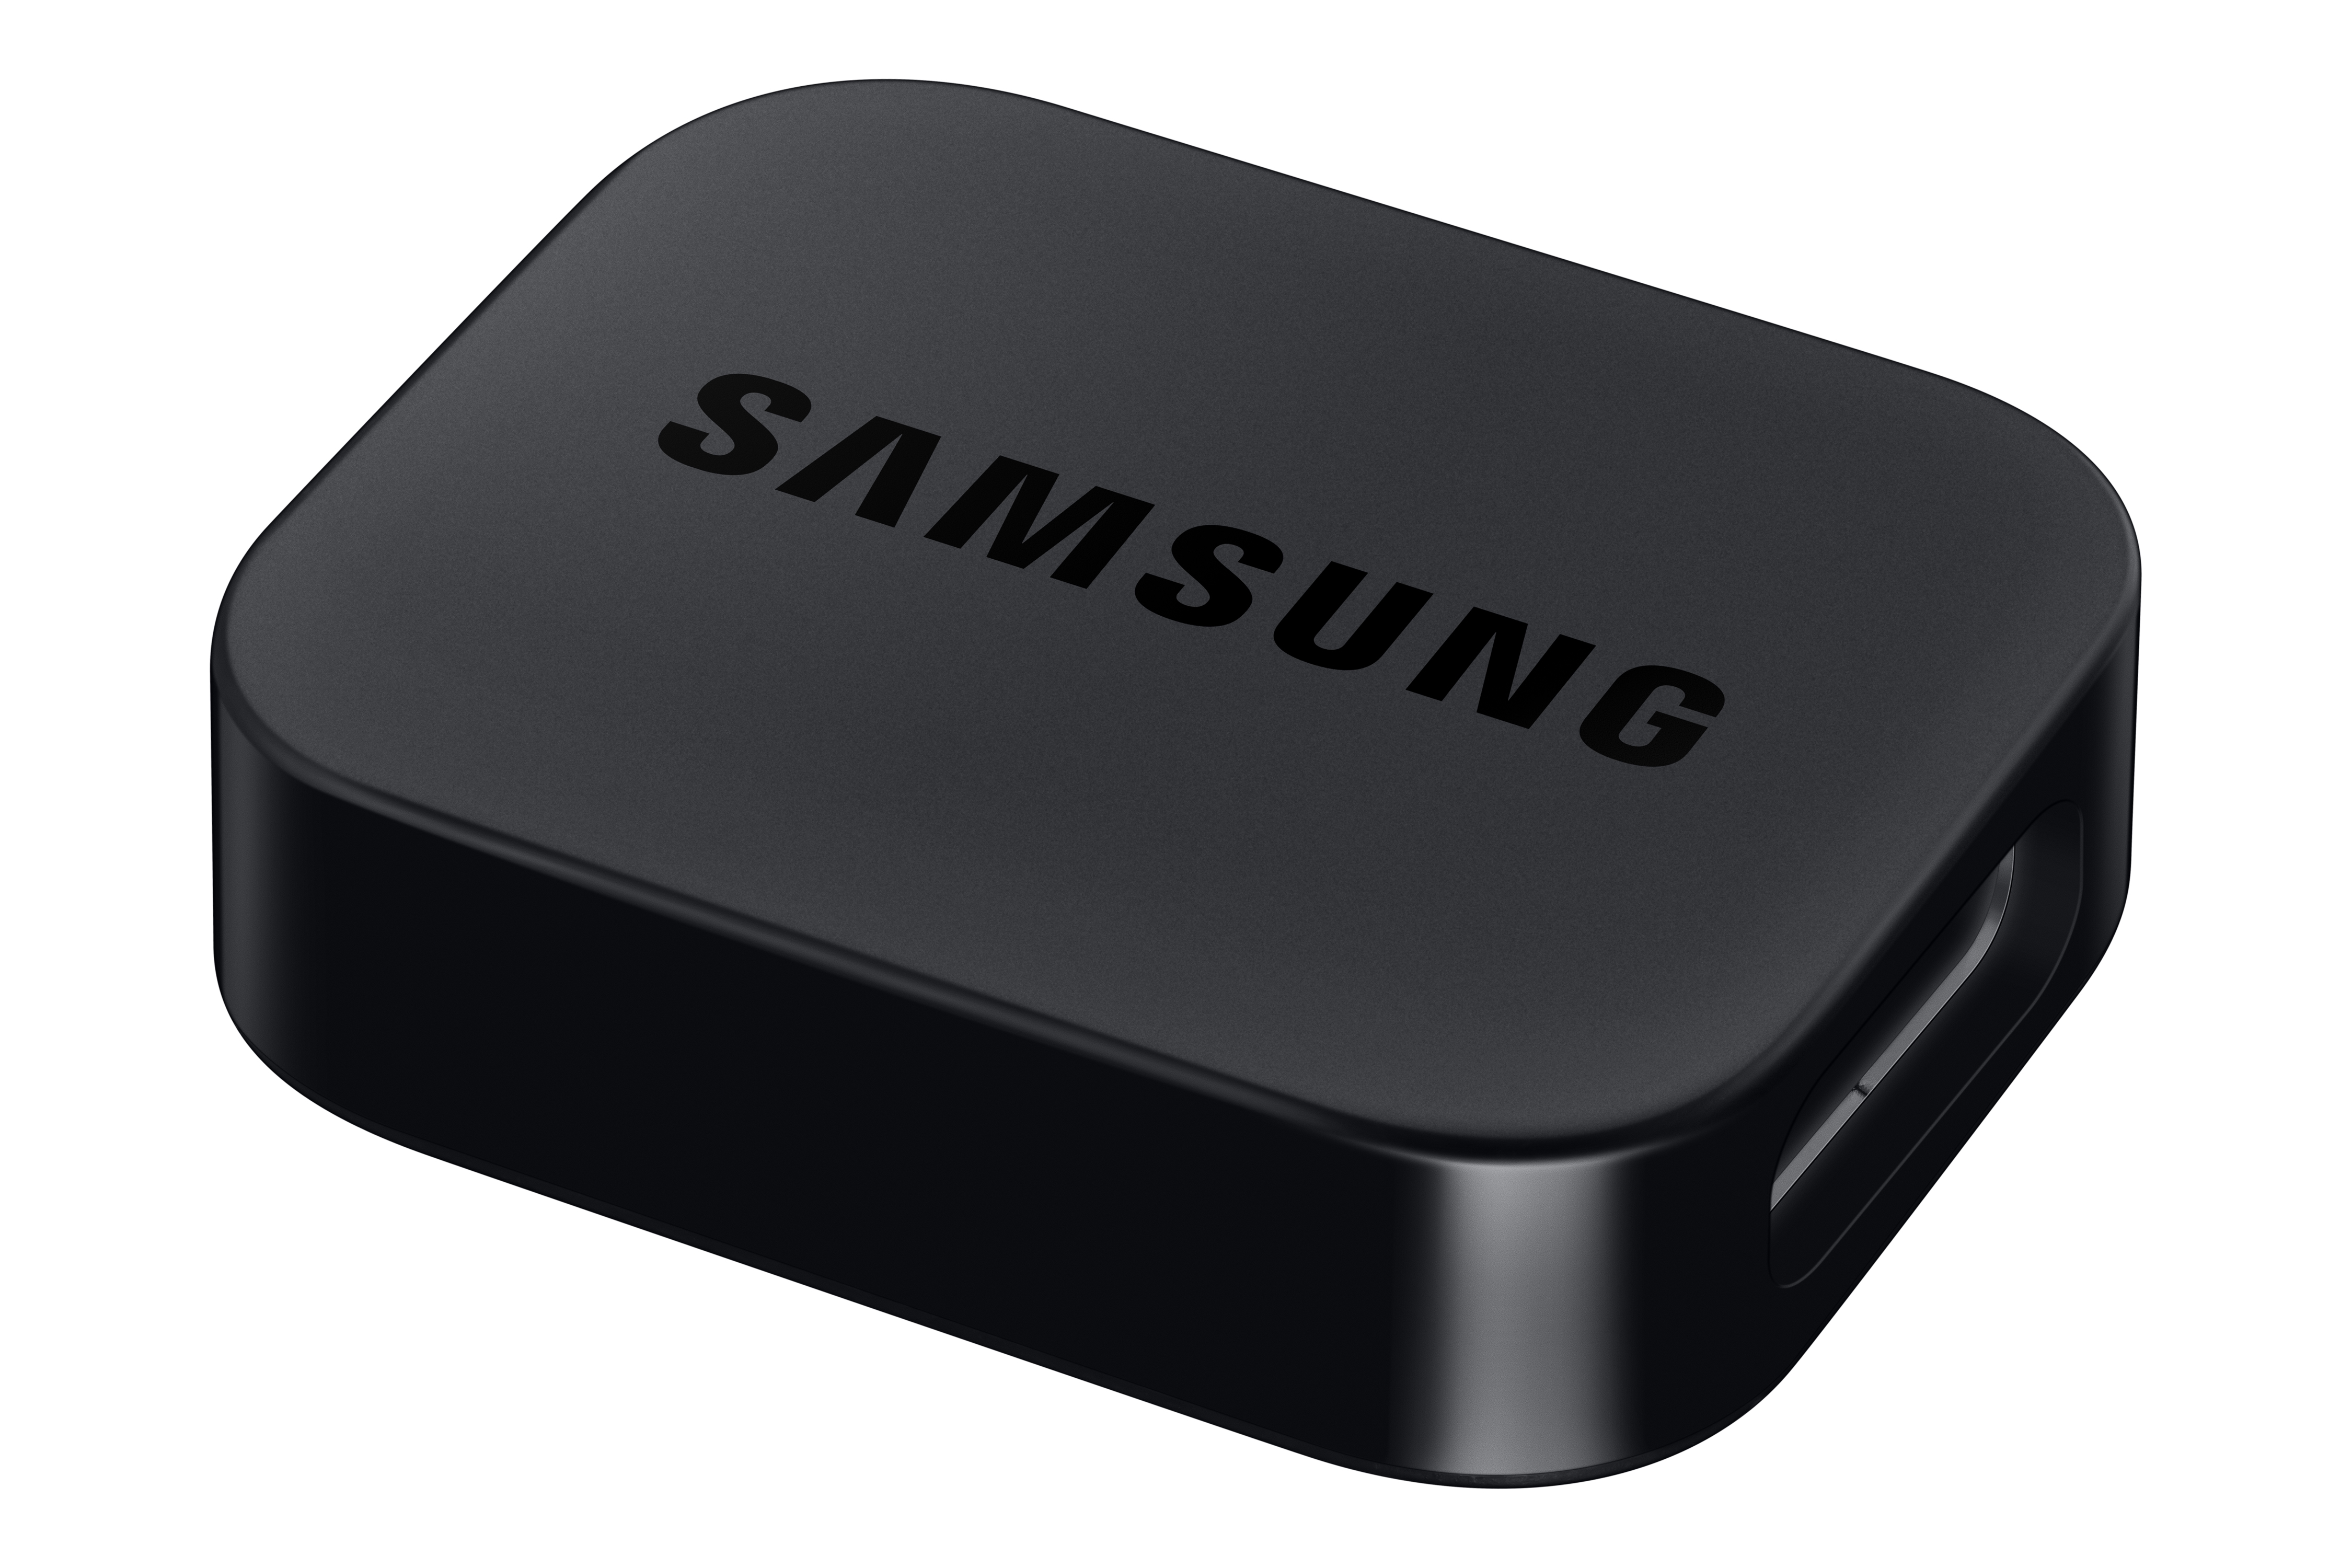 Nominering rådgive dramatisk SmartThings Hub Dongle for TV | Samsung US